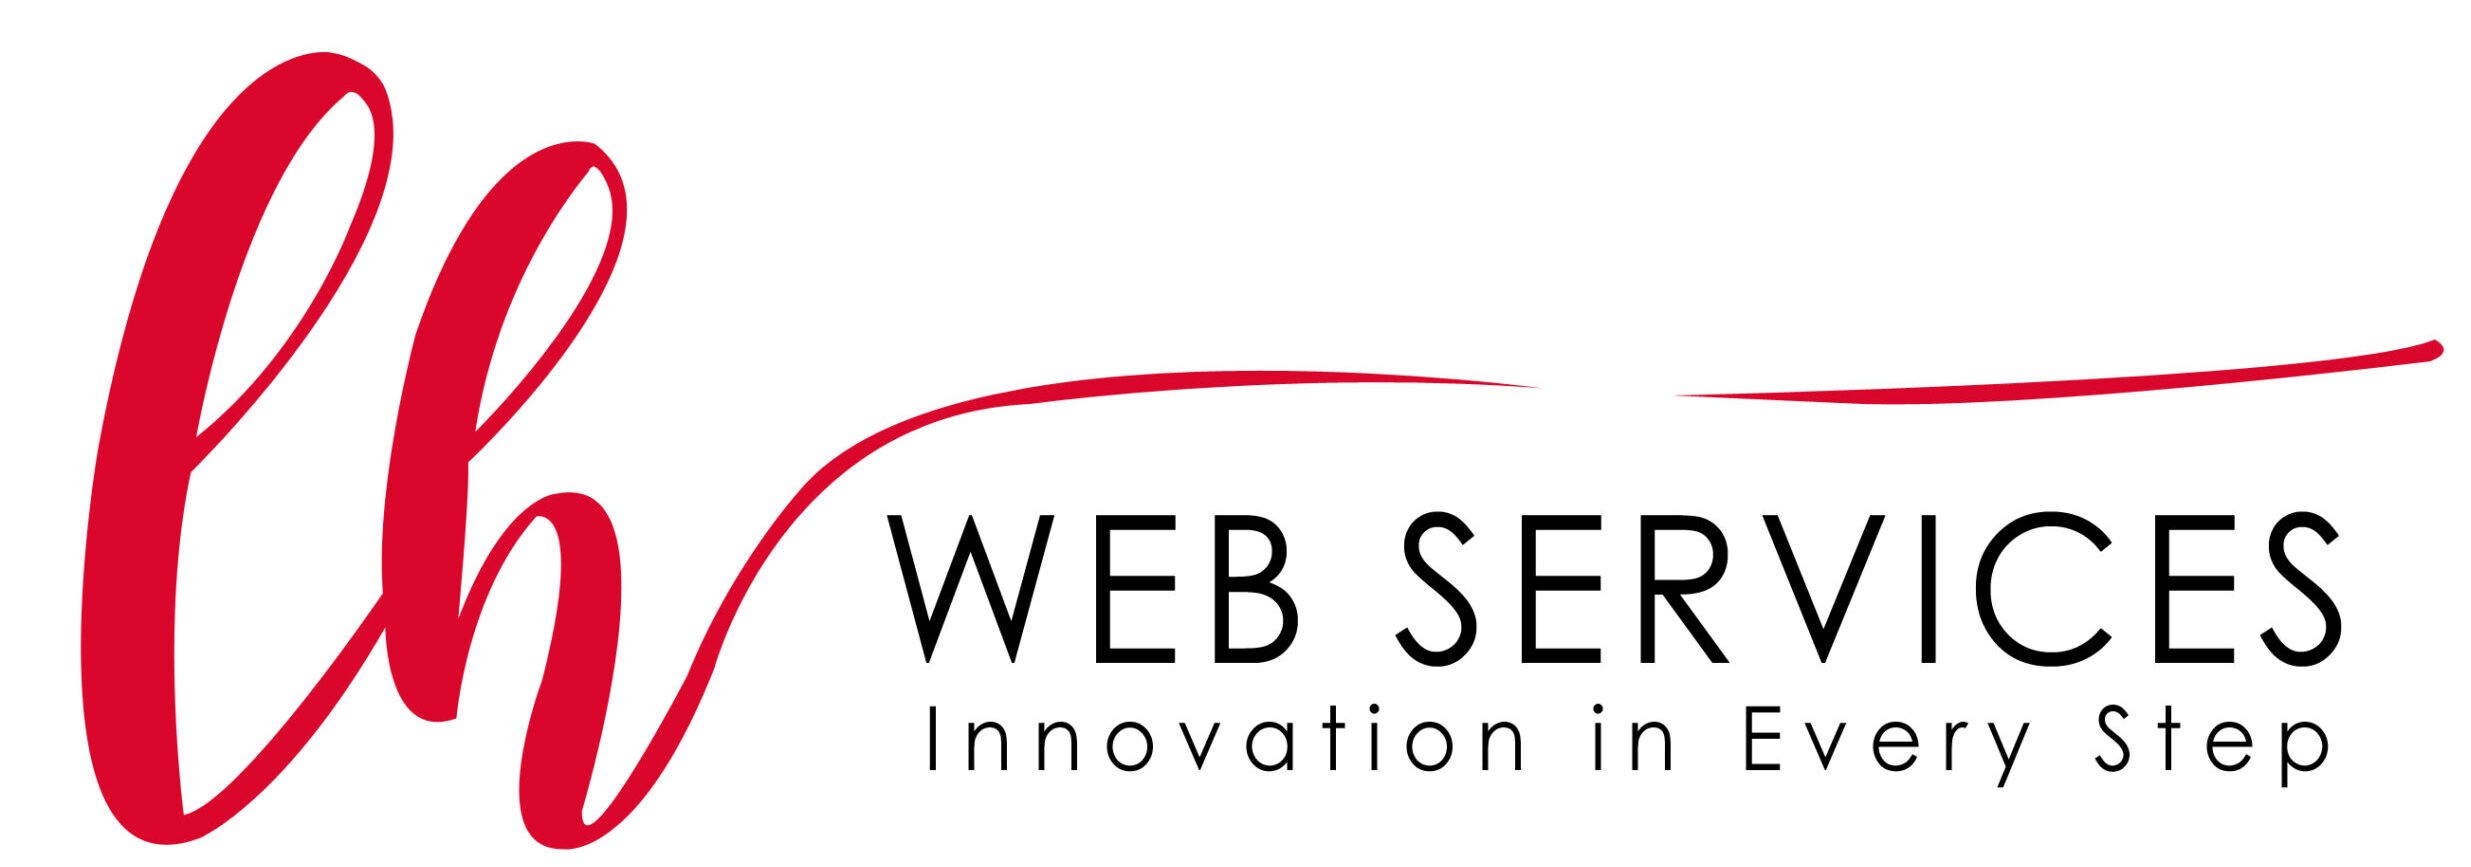 Company logo Lh webservices